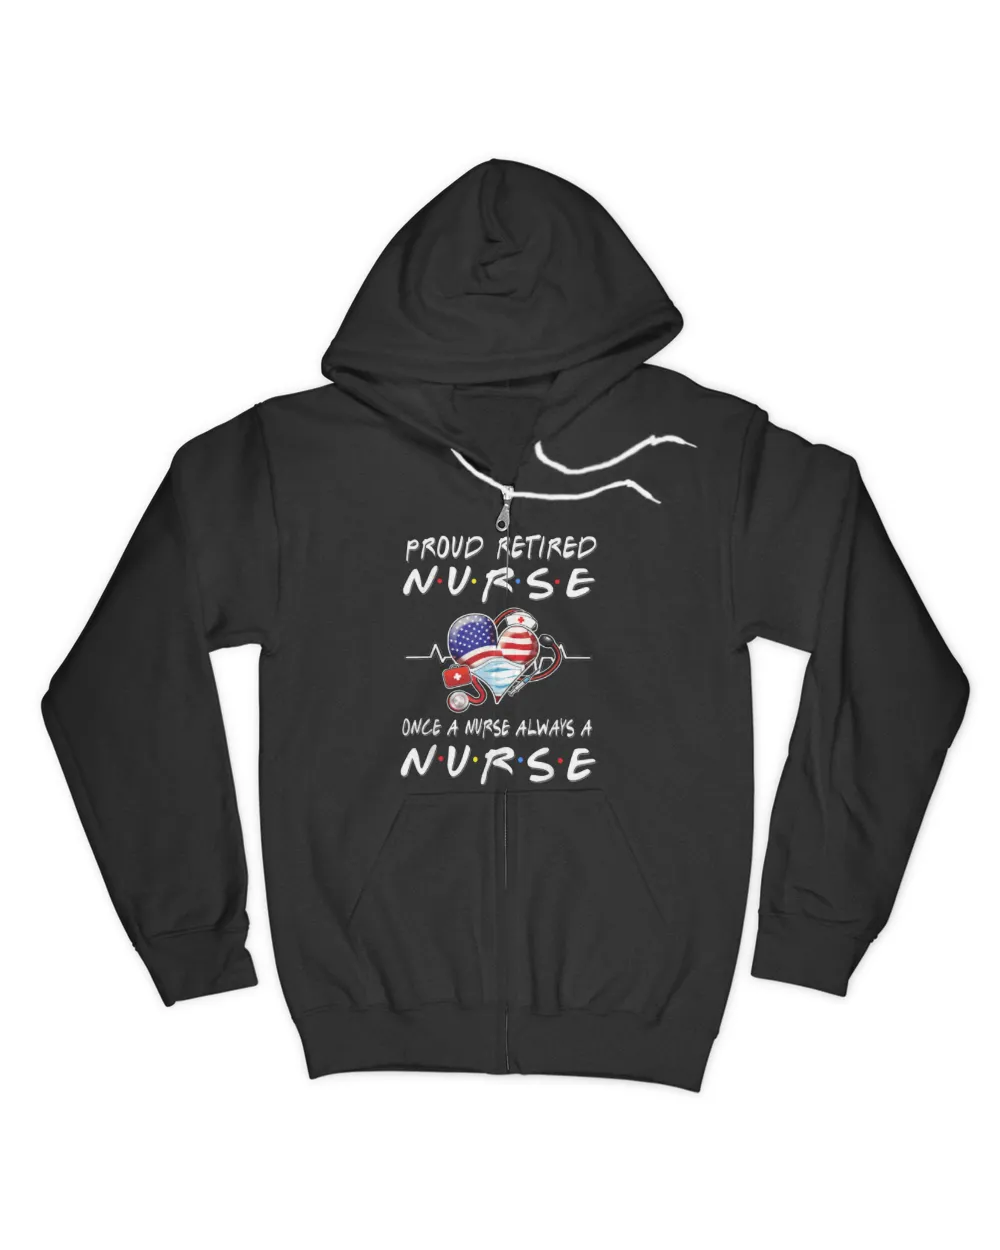 Proud Retired Nurse Once A Nurse Always A Nurse Retirement T-Shirt